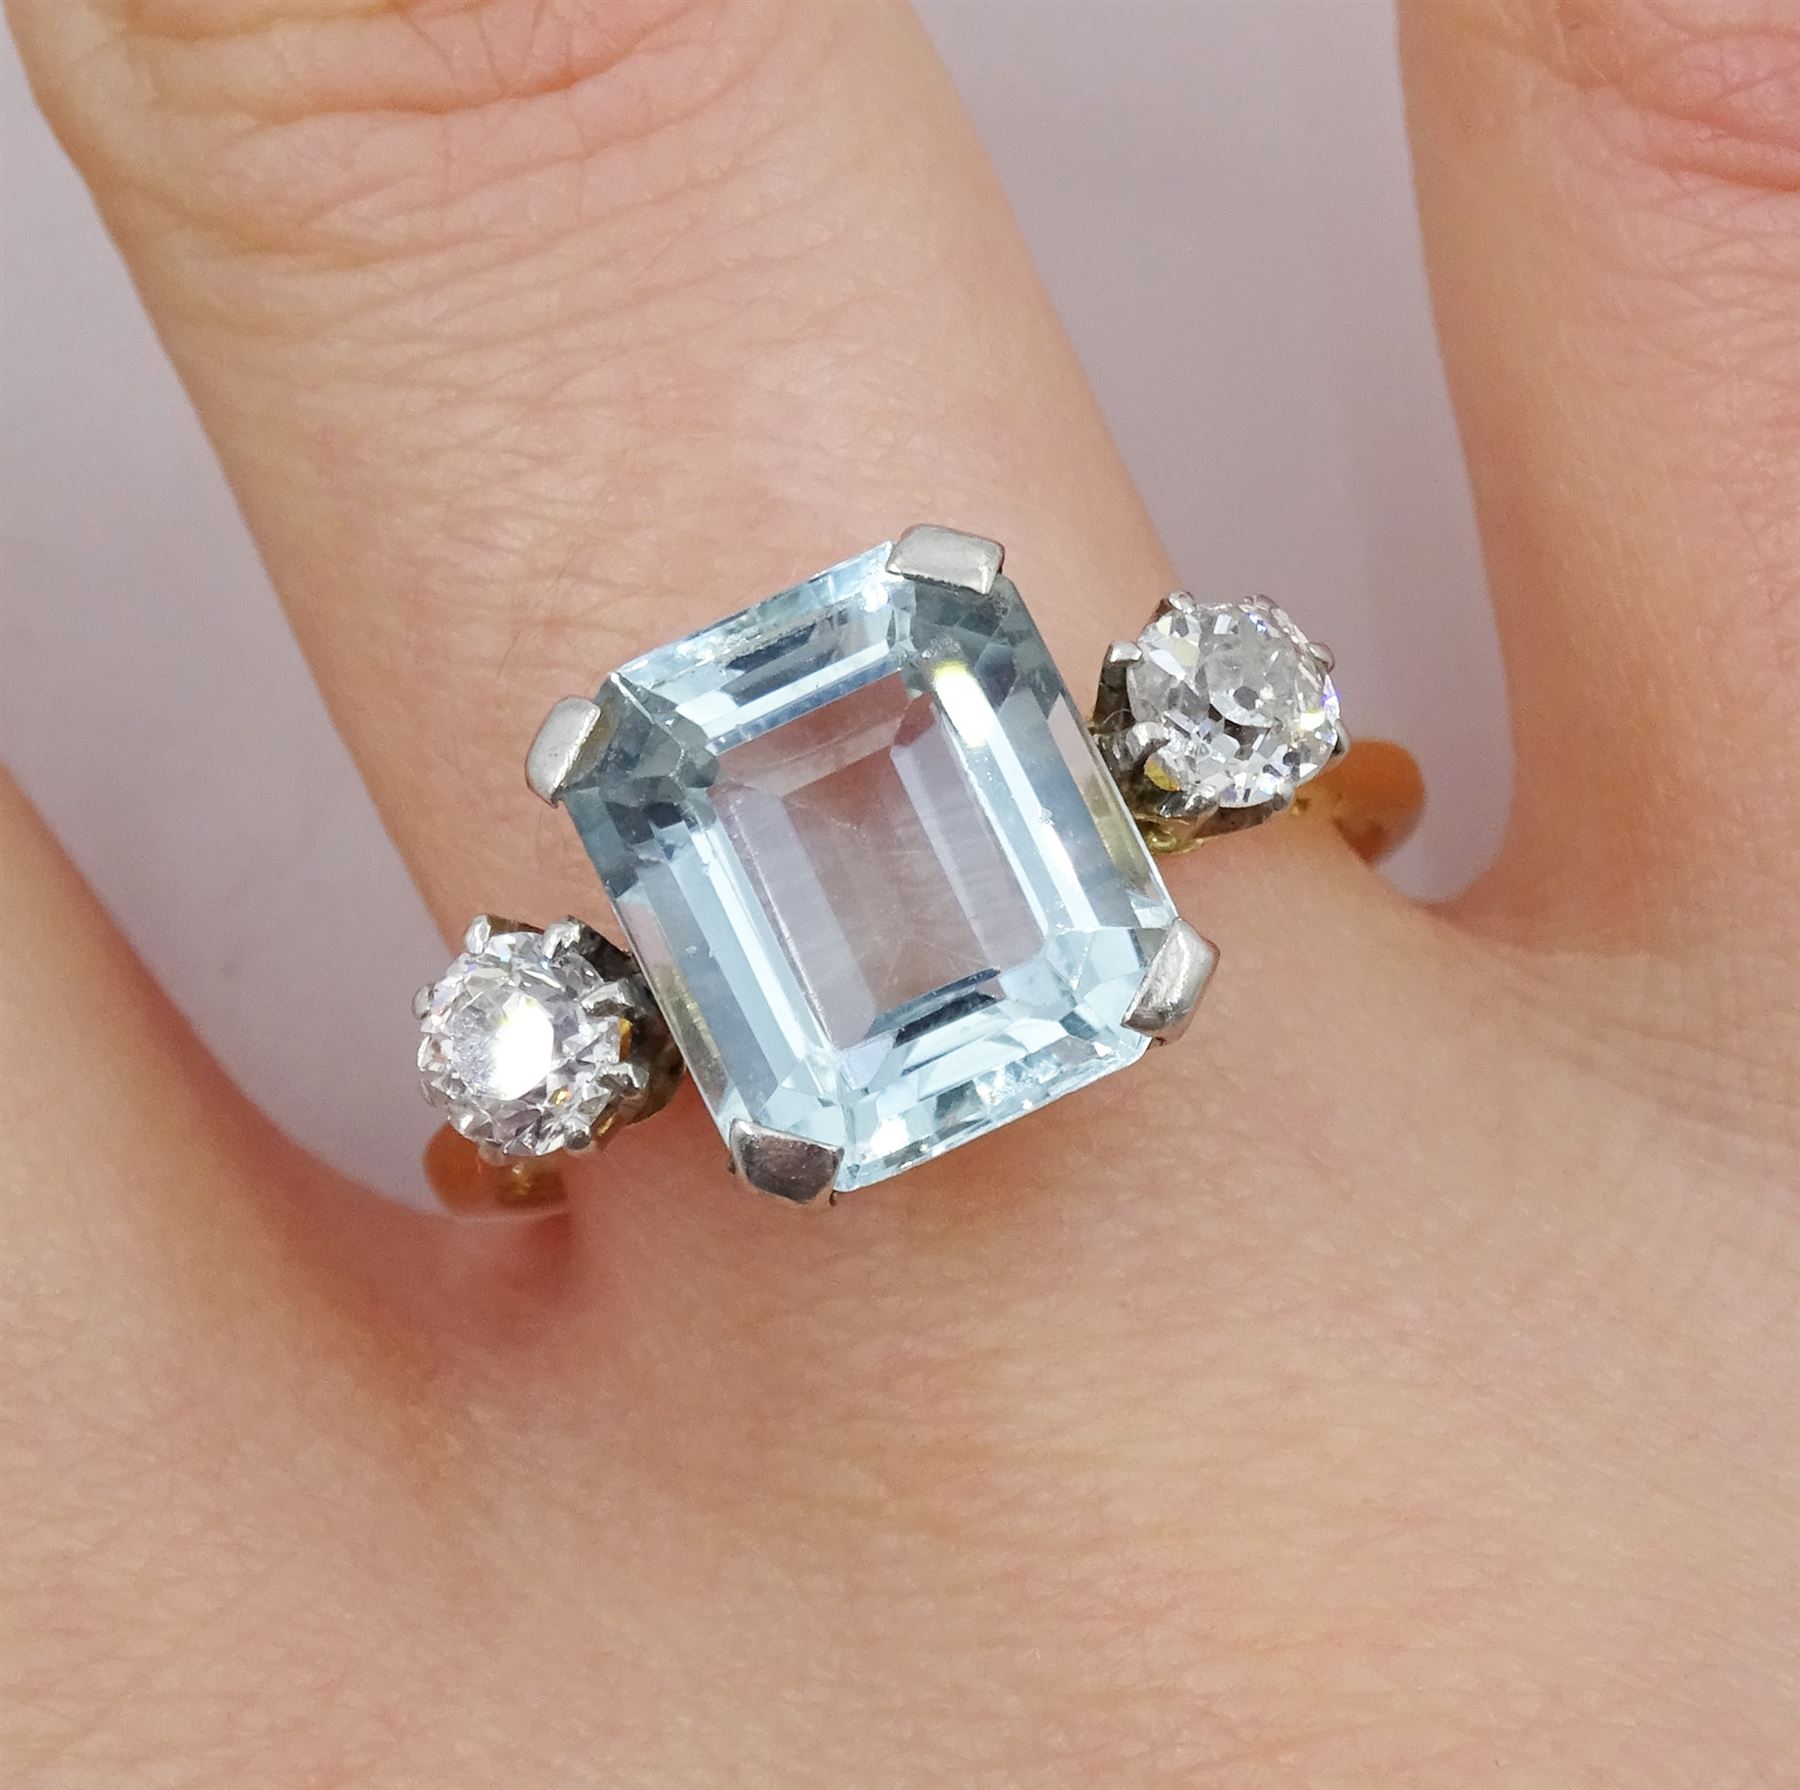 Mid 20th century mixed emerald cut aquamarine and old cut diamond three stone ring - Image 2 of 4